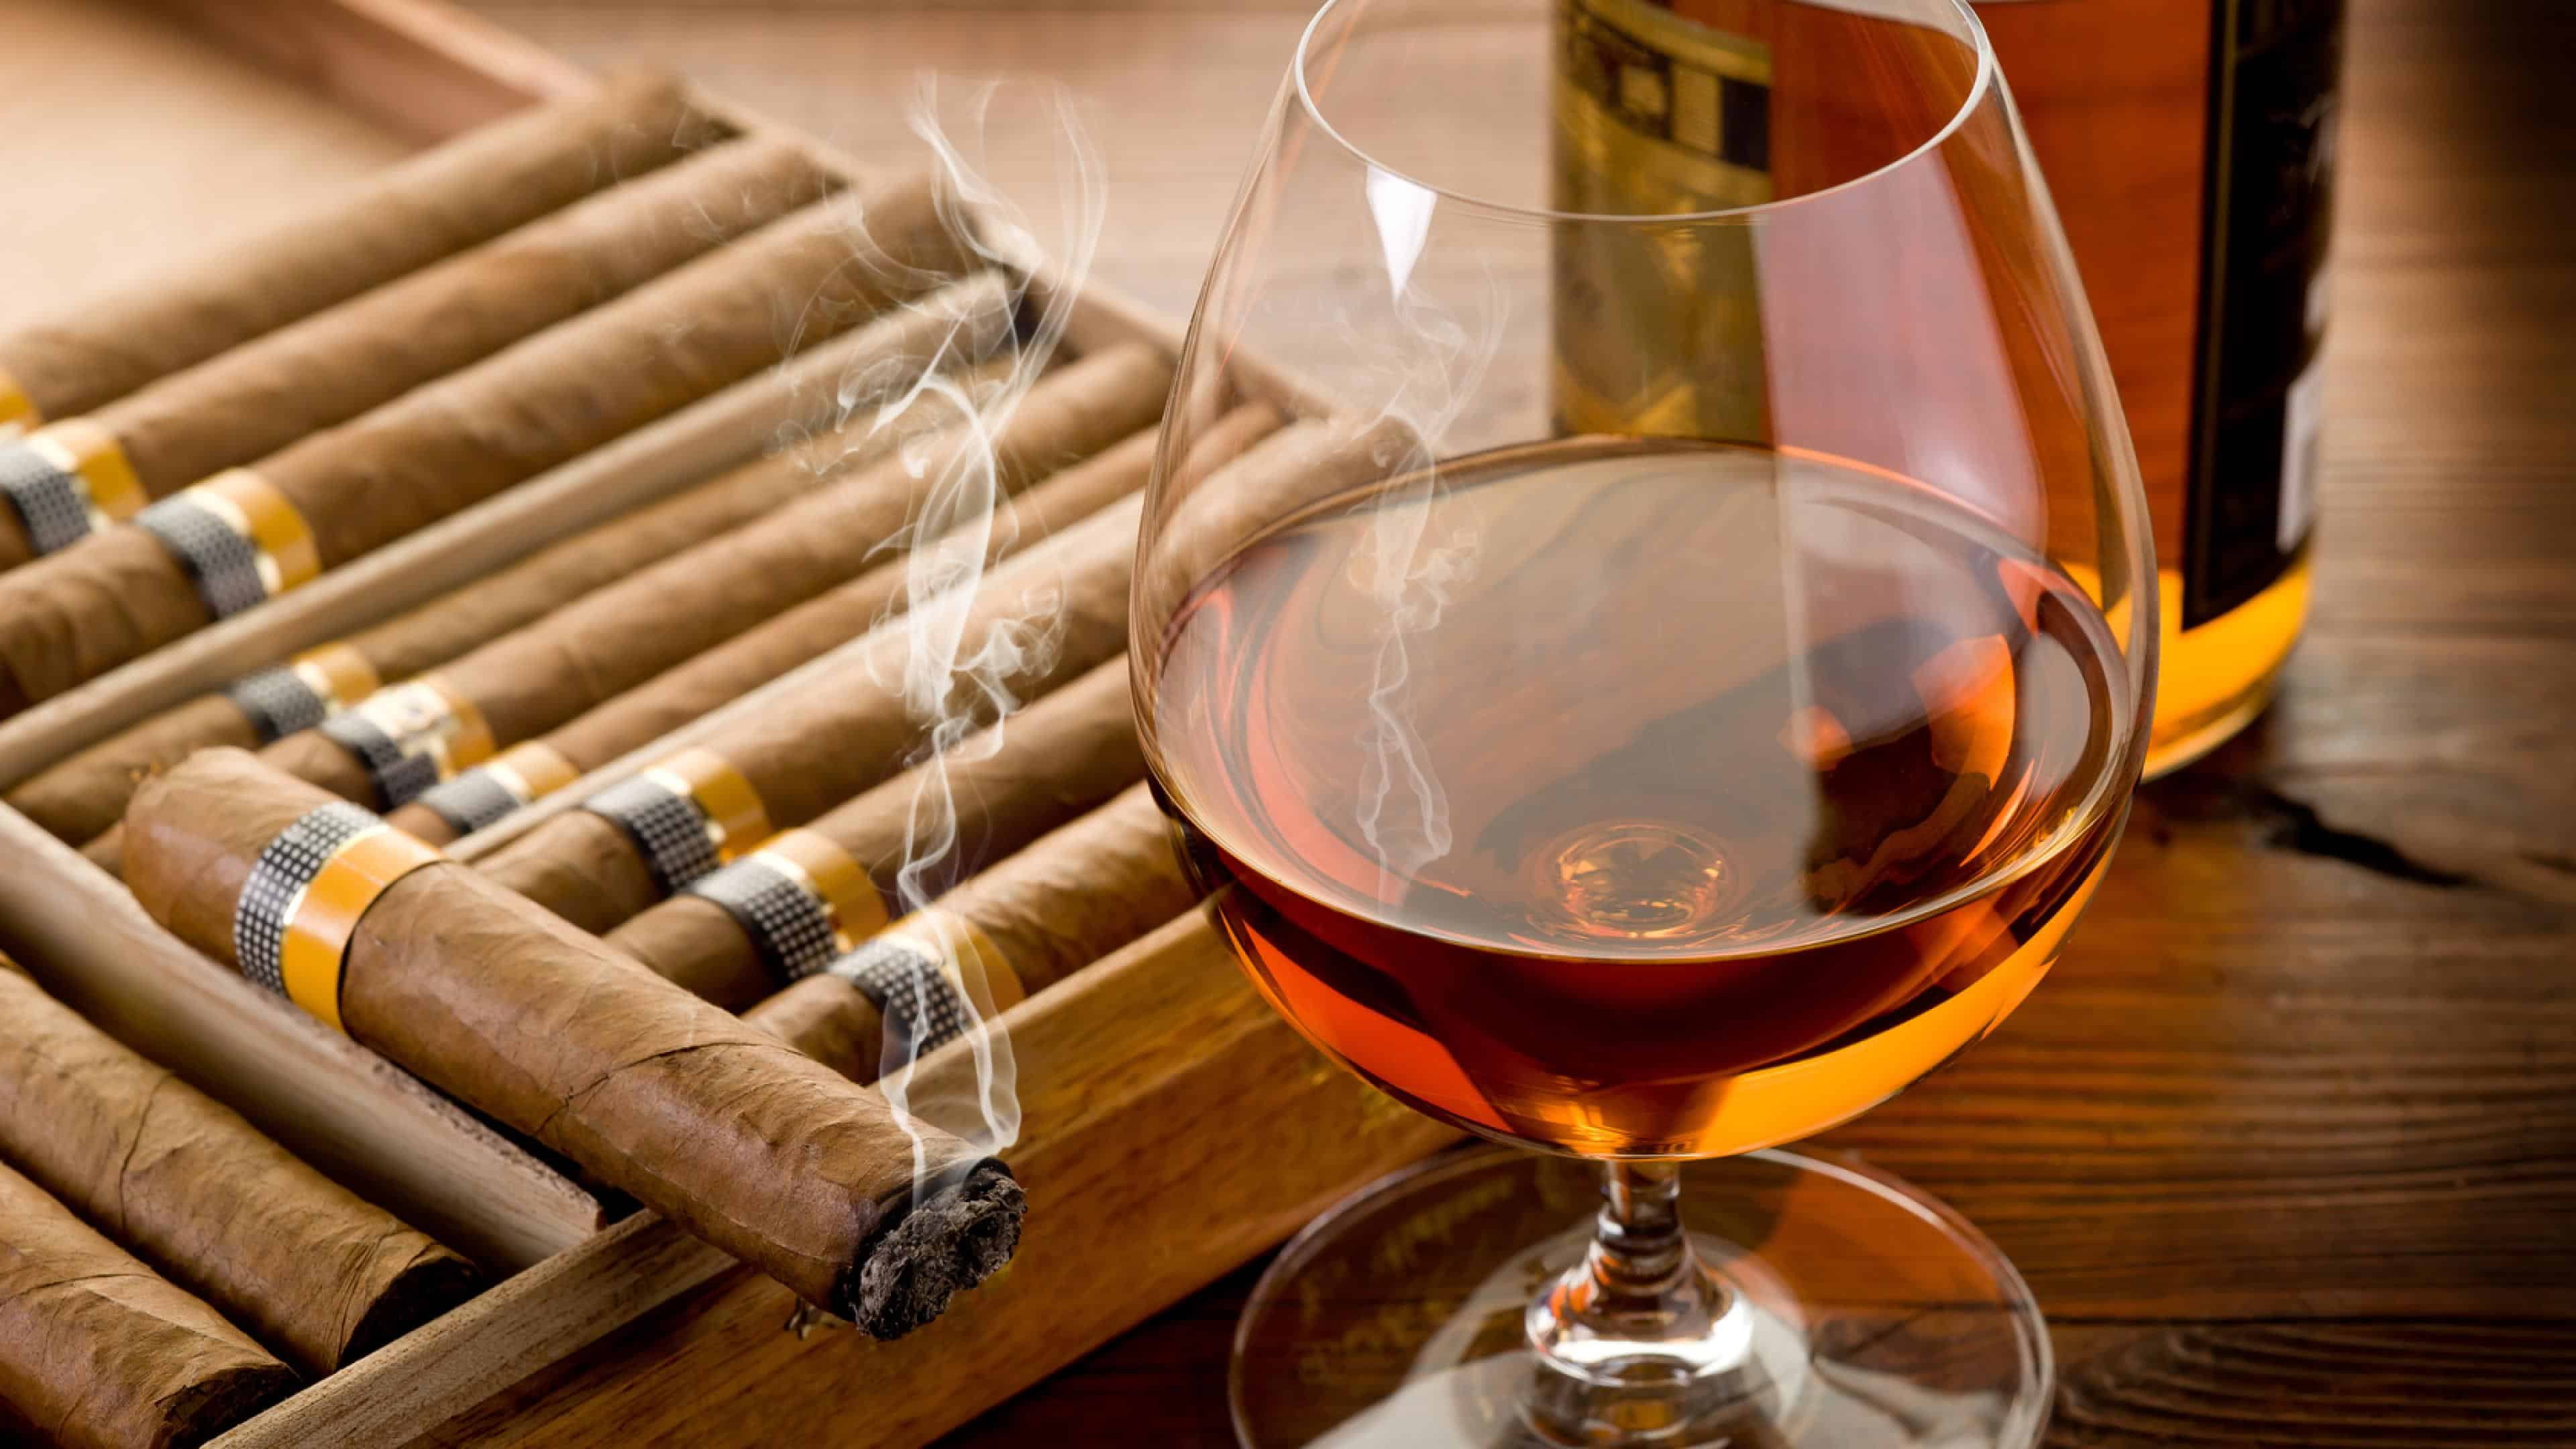 Cuban Cigar And Glass Of Cognac UHD 4k Wallpaper Cc